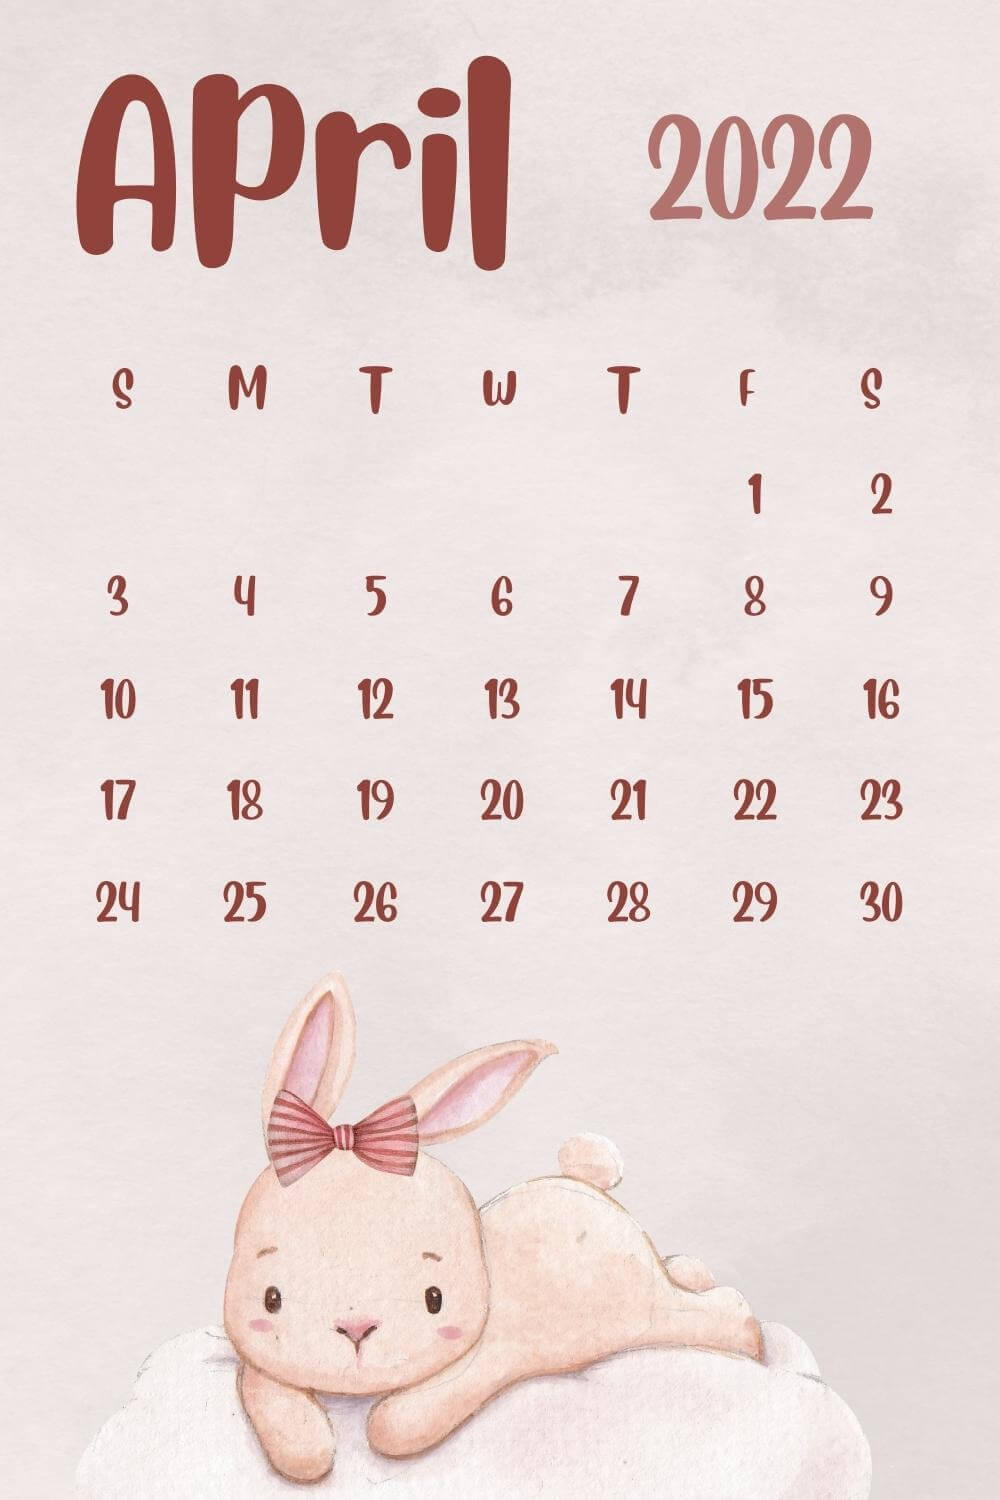 april 2022 calendar wallpaper for mobile